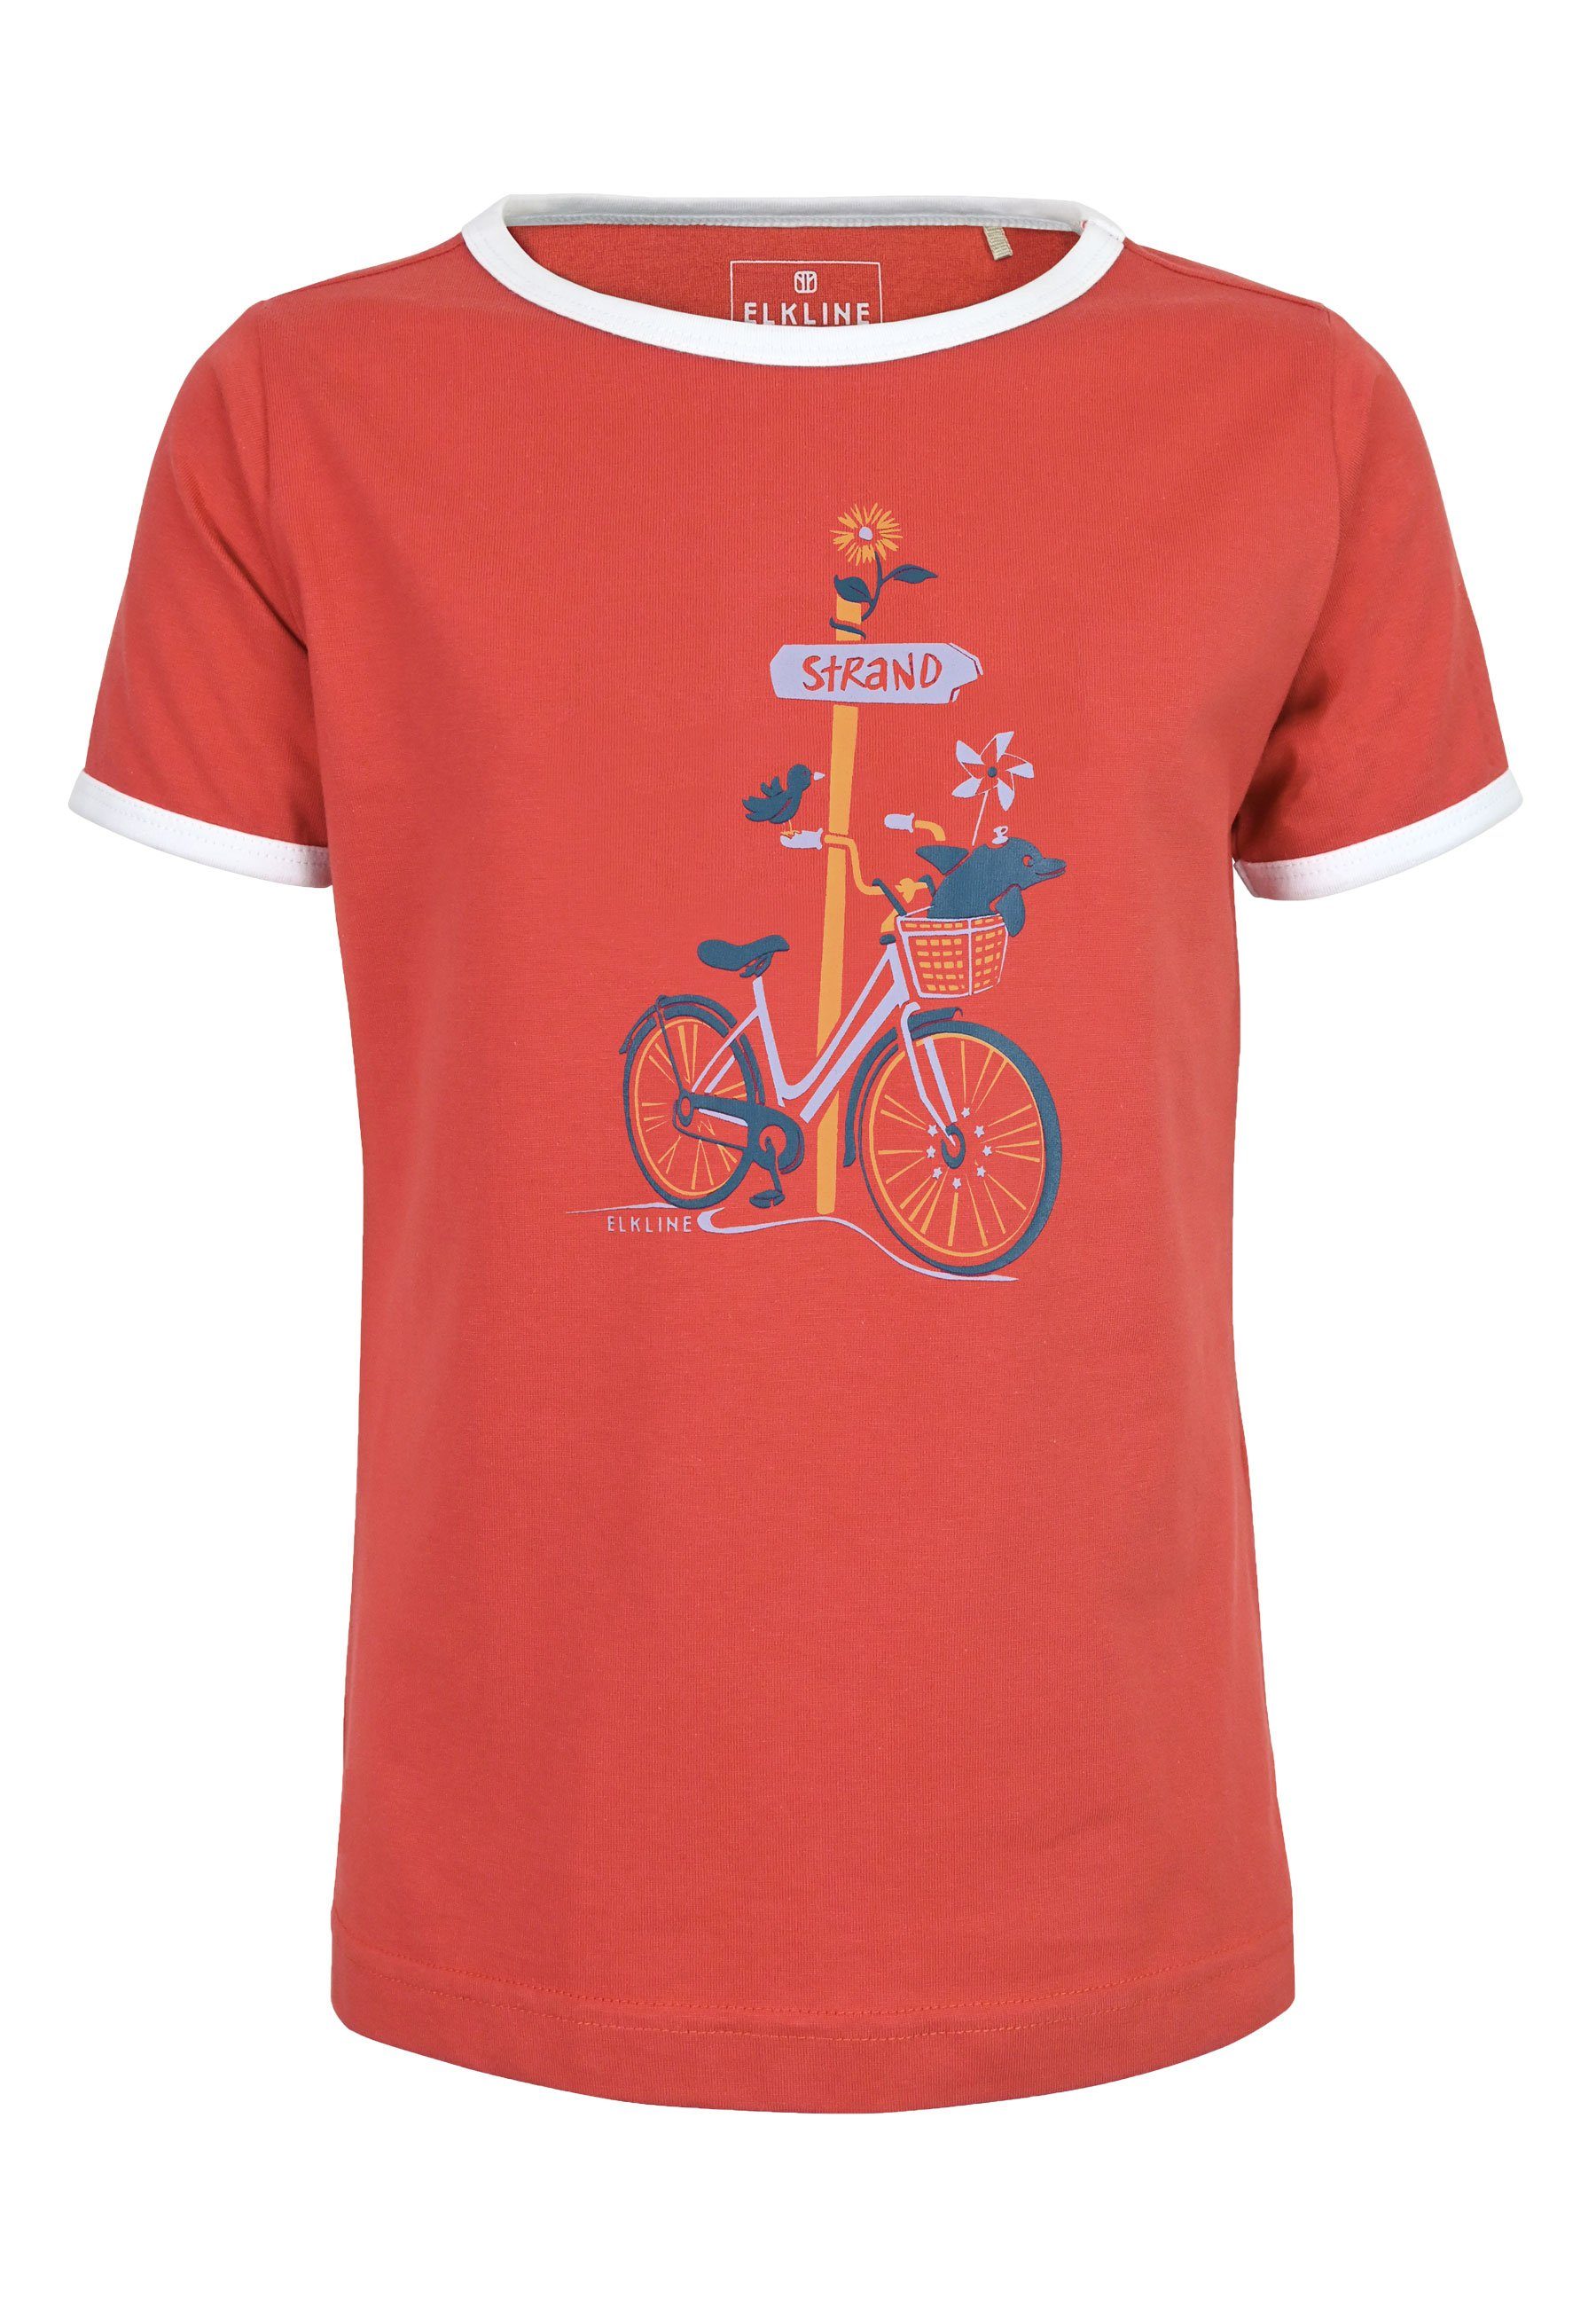 Elkline T-Shirt Zum Strand Fahrrad Brust Print leicht tailliert mandarin